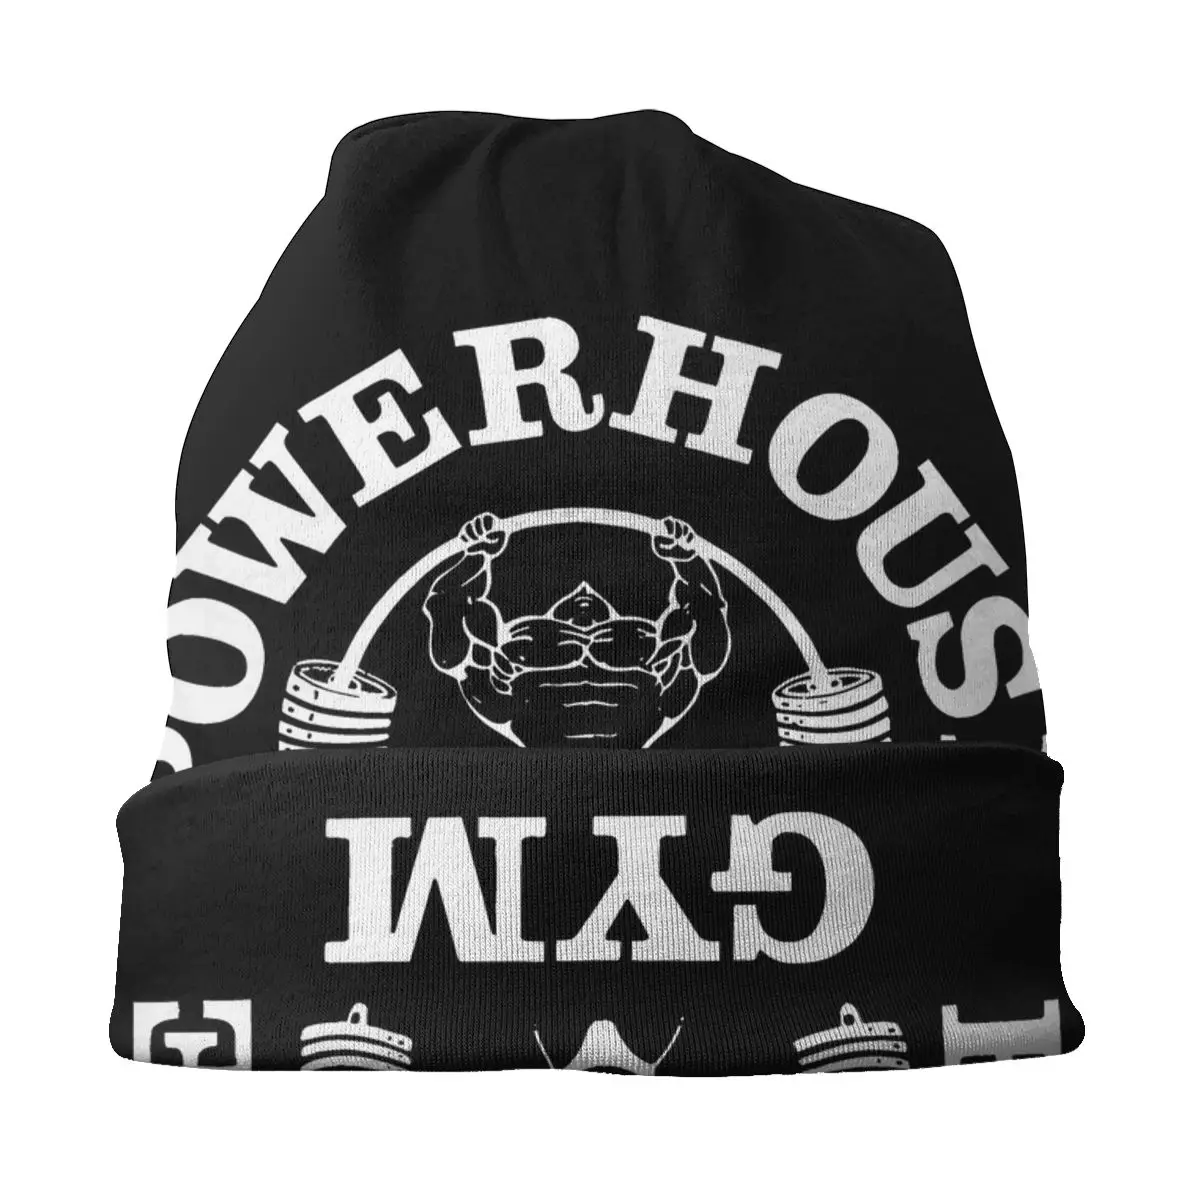 Powerhouse Gym Skullies Aesthetic Warm Hip-hop Street Punk Gothic Hats Streetwear